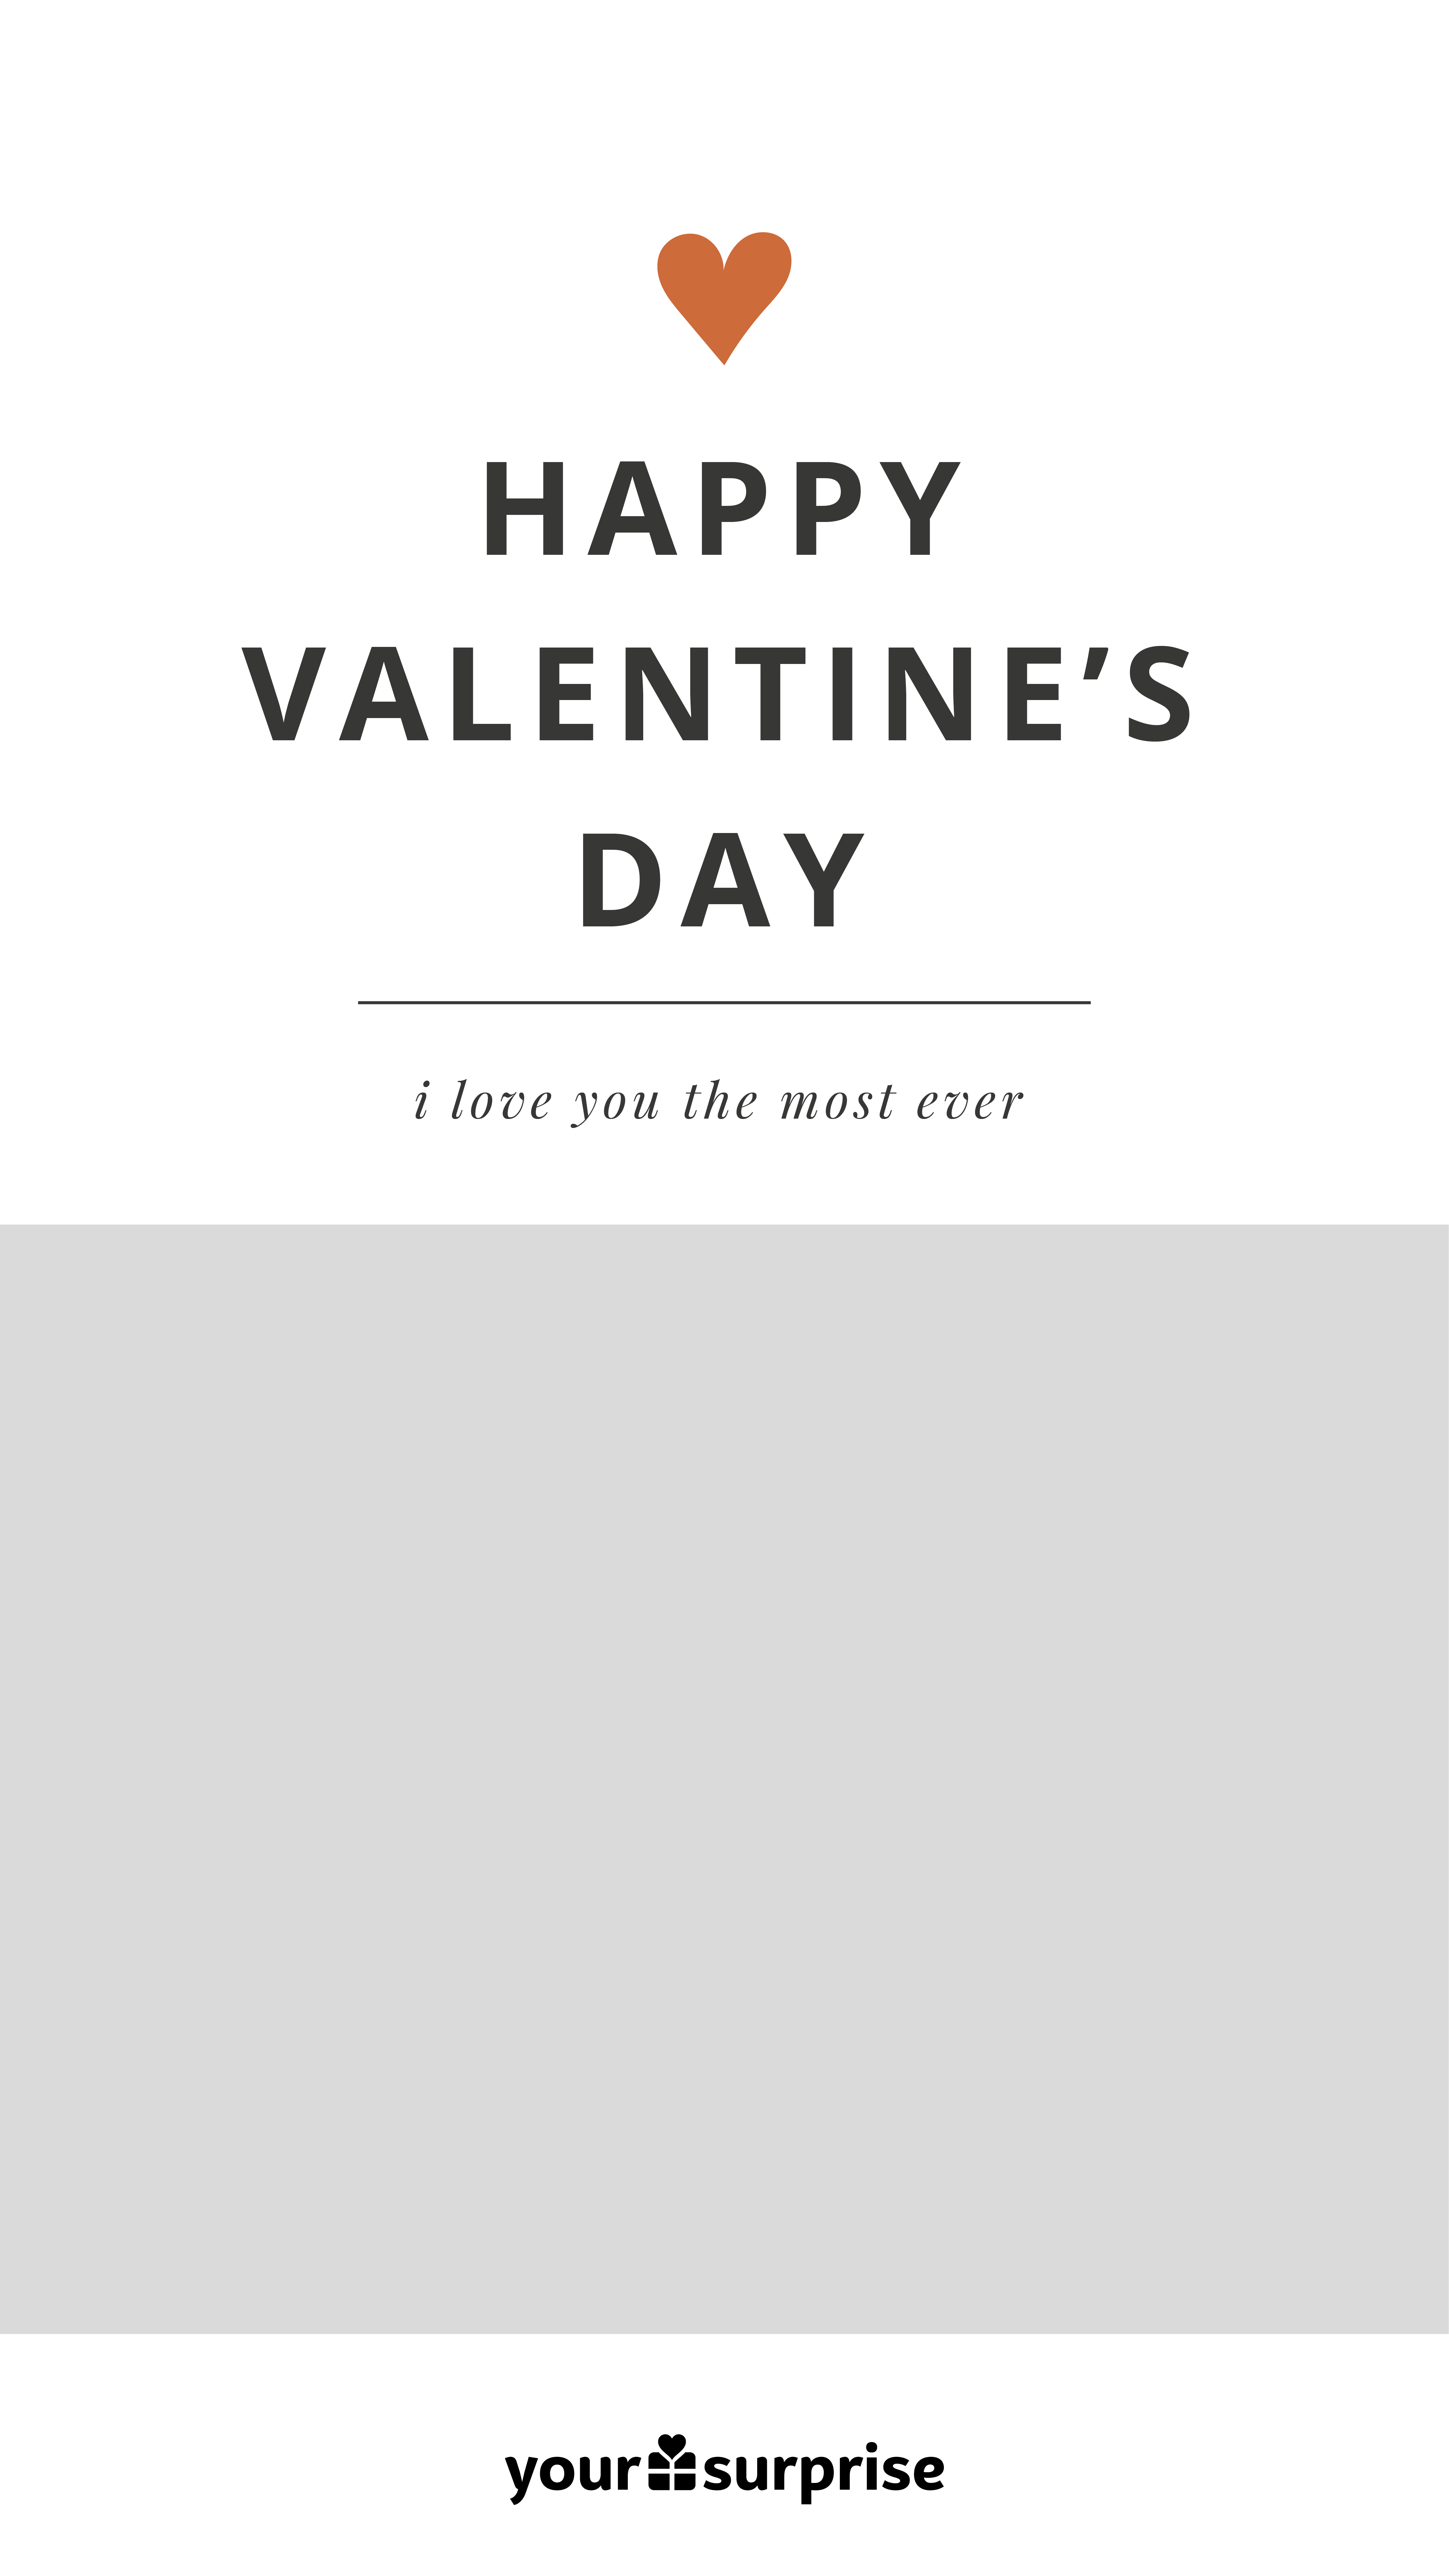 free download: digital valentine's day cards